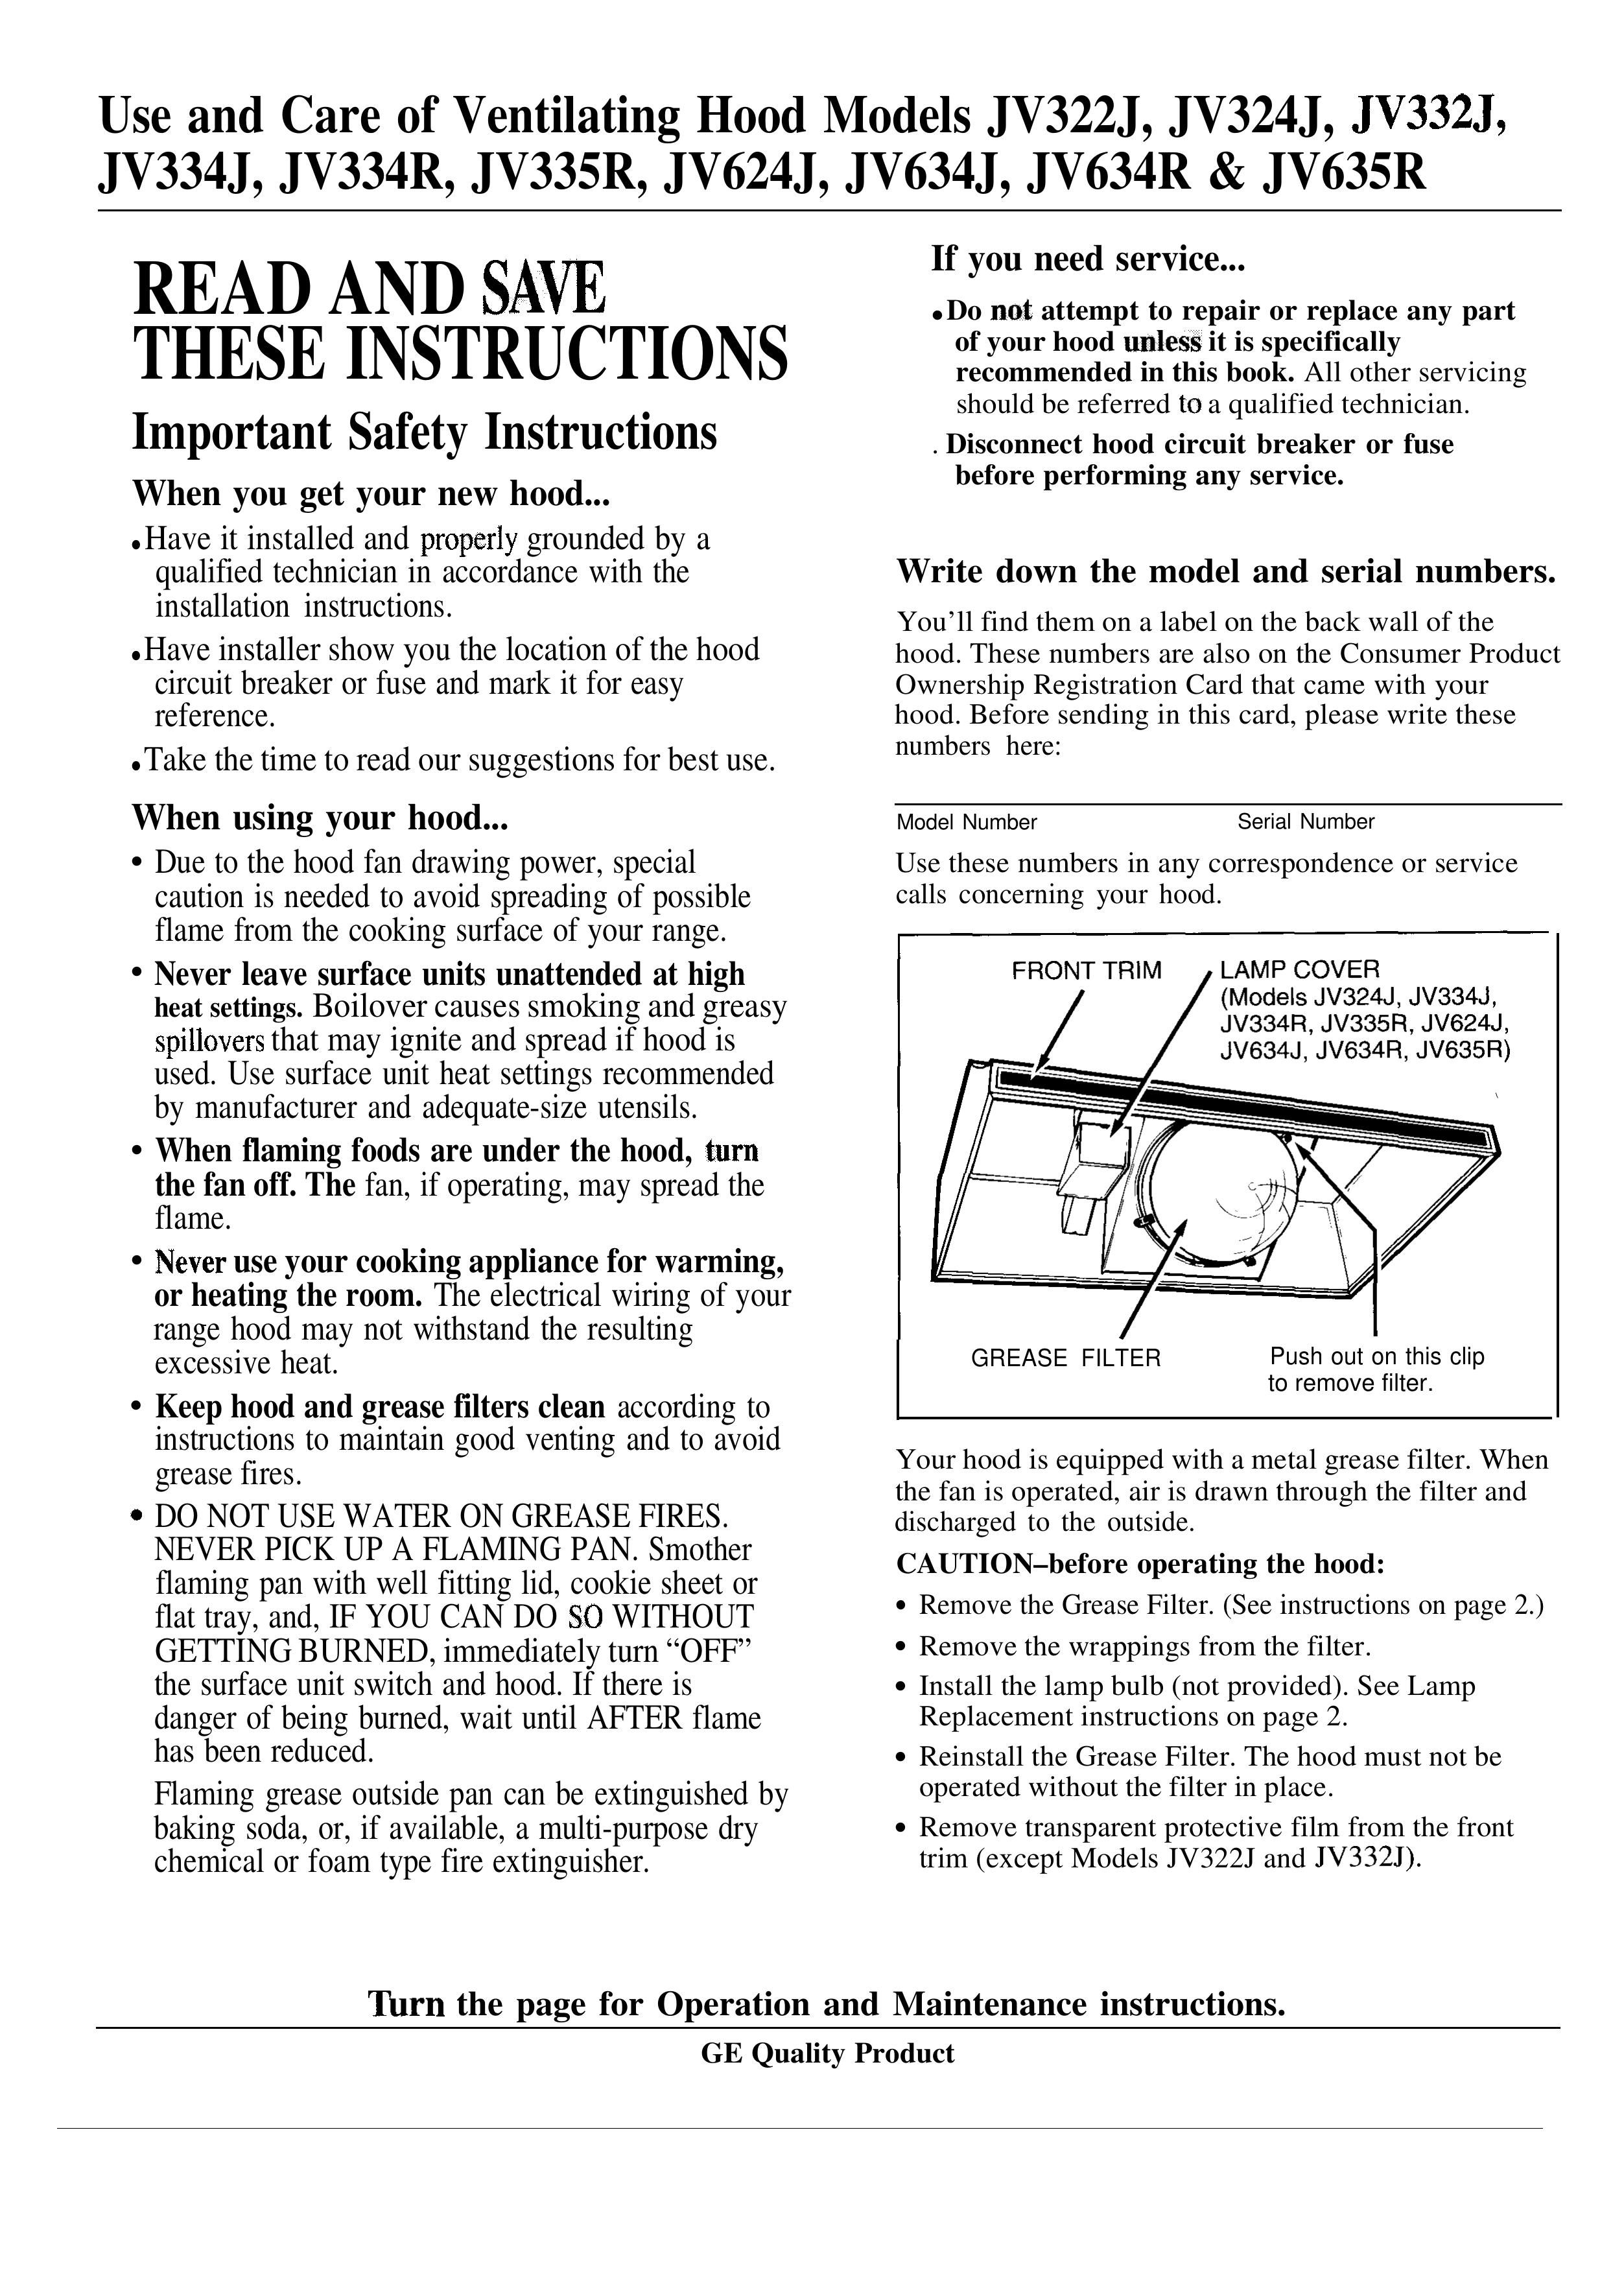 GE JV335R Ventilation Hood User Manual